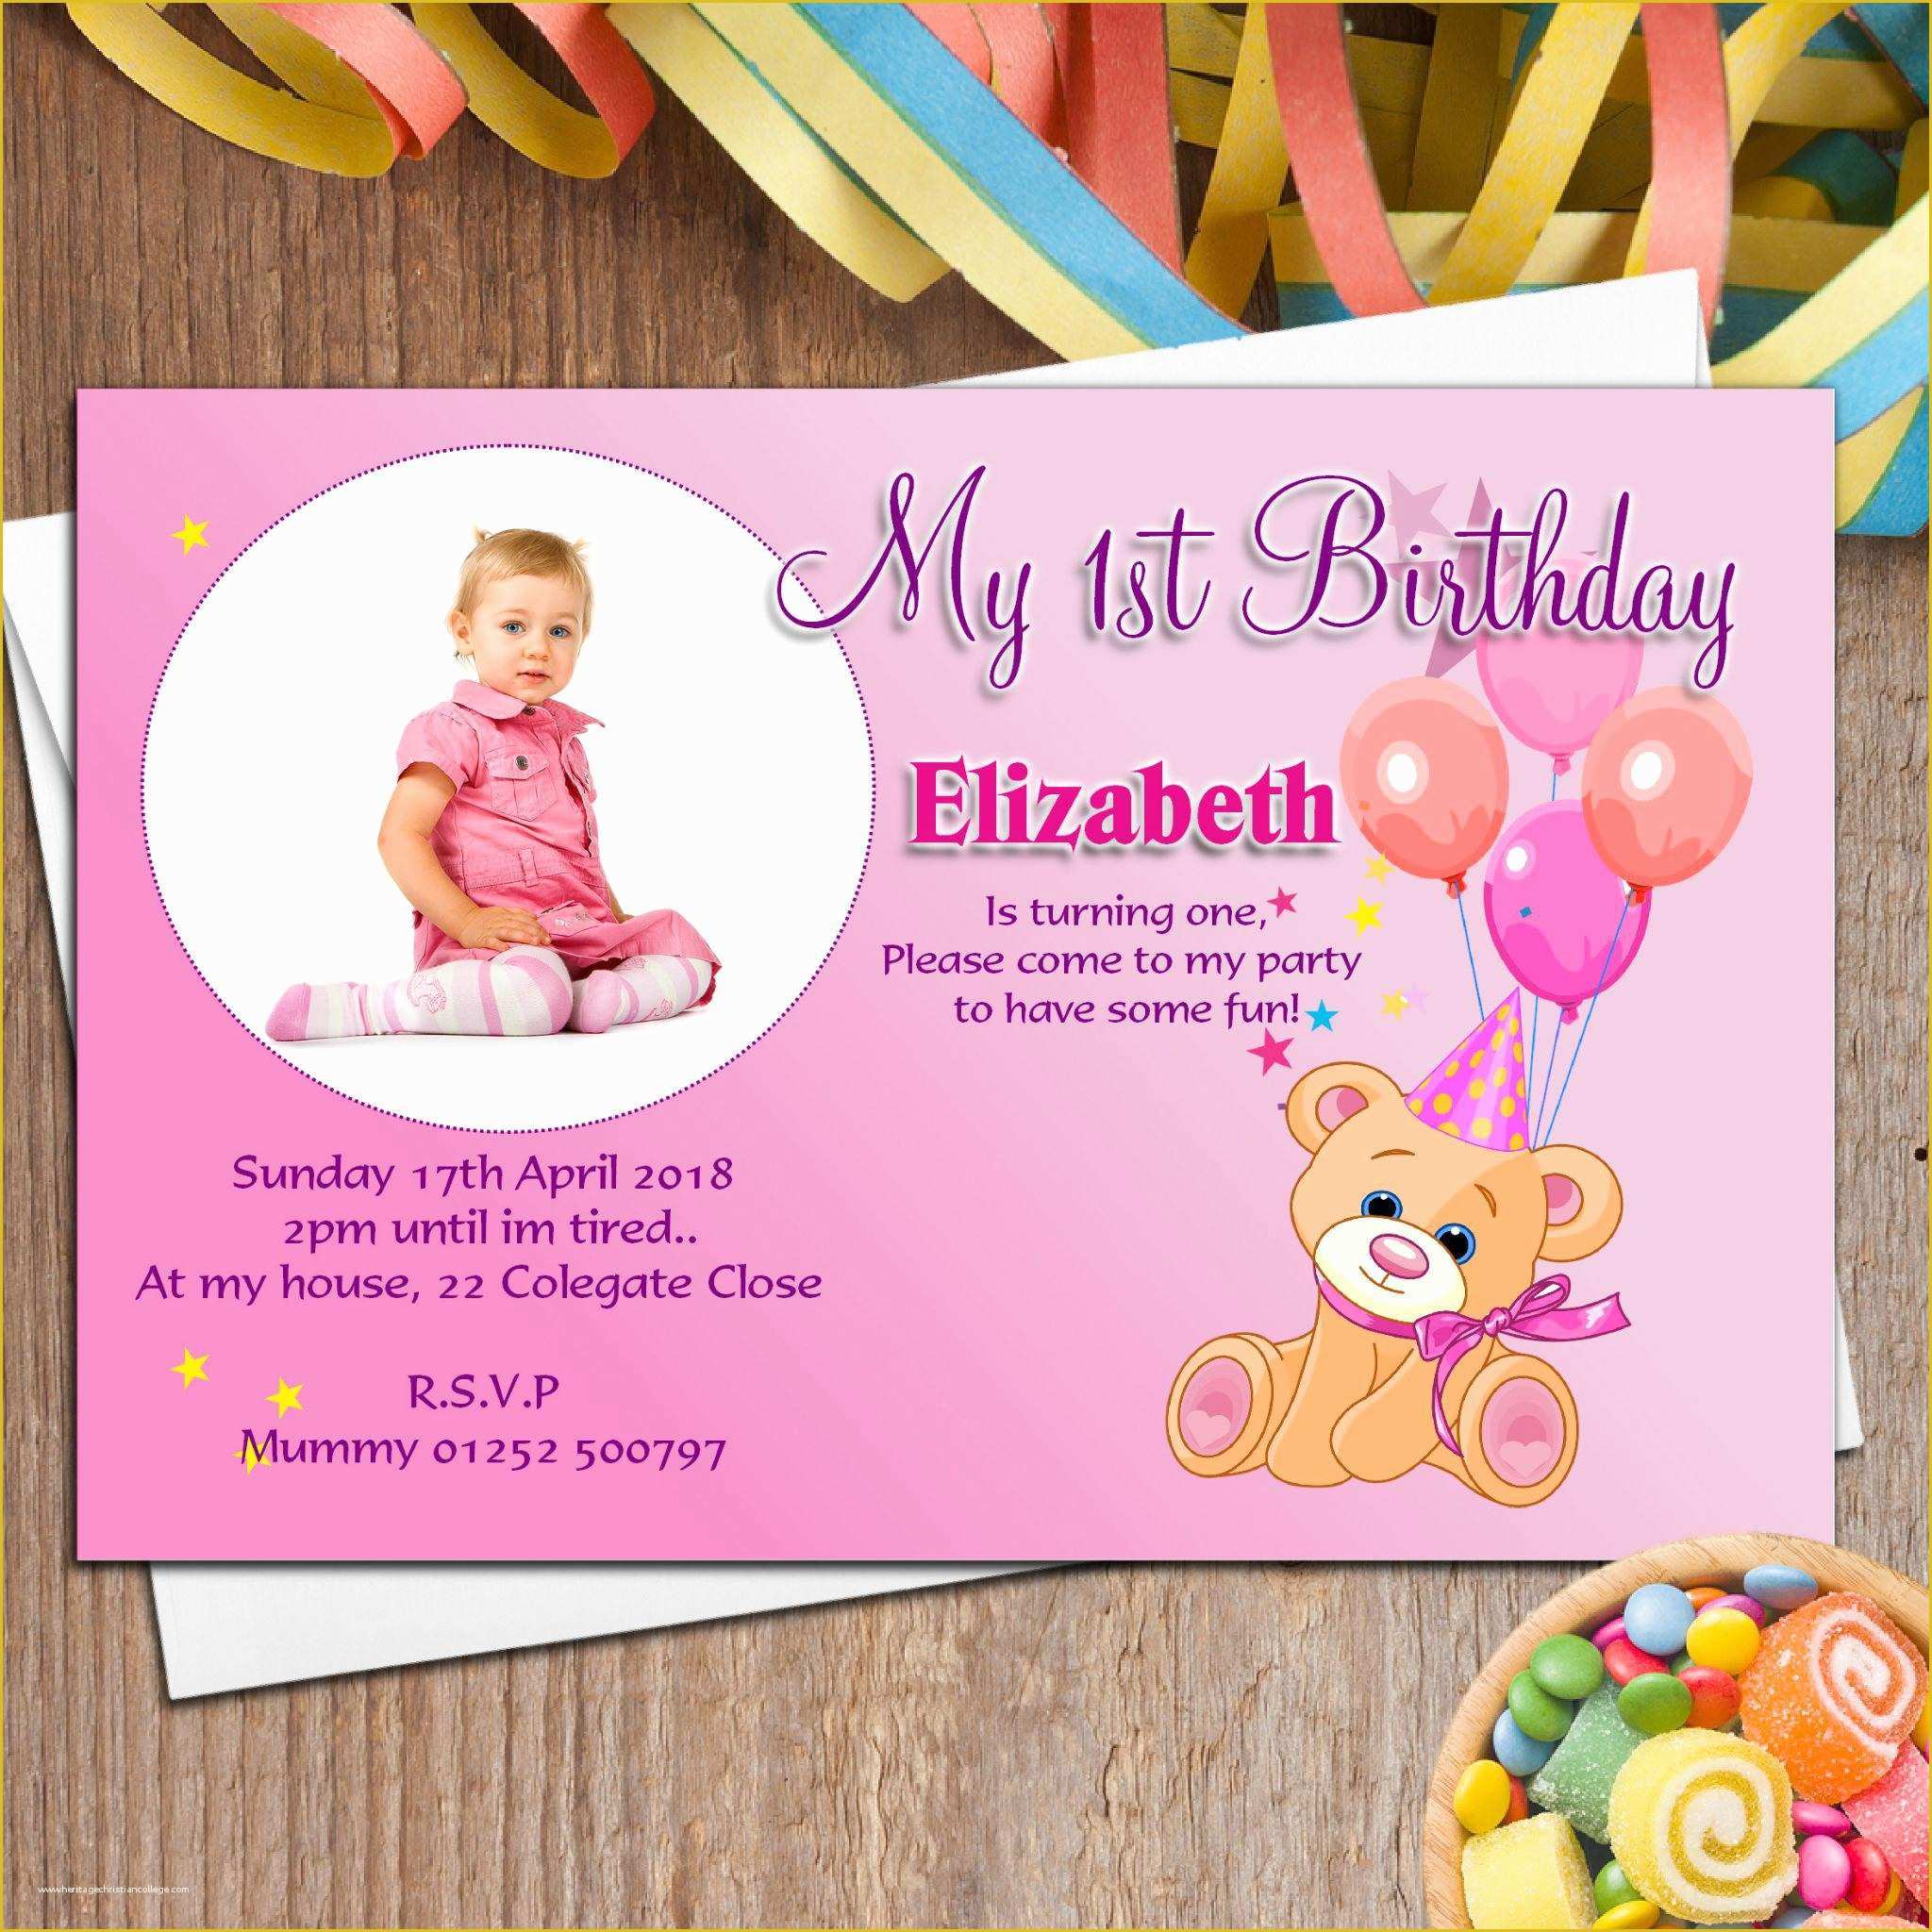 Free Personalized Birthday Invitation Templates Of 20 Birthday Invitations Cards – Sample Wording Printable